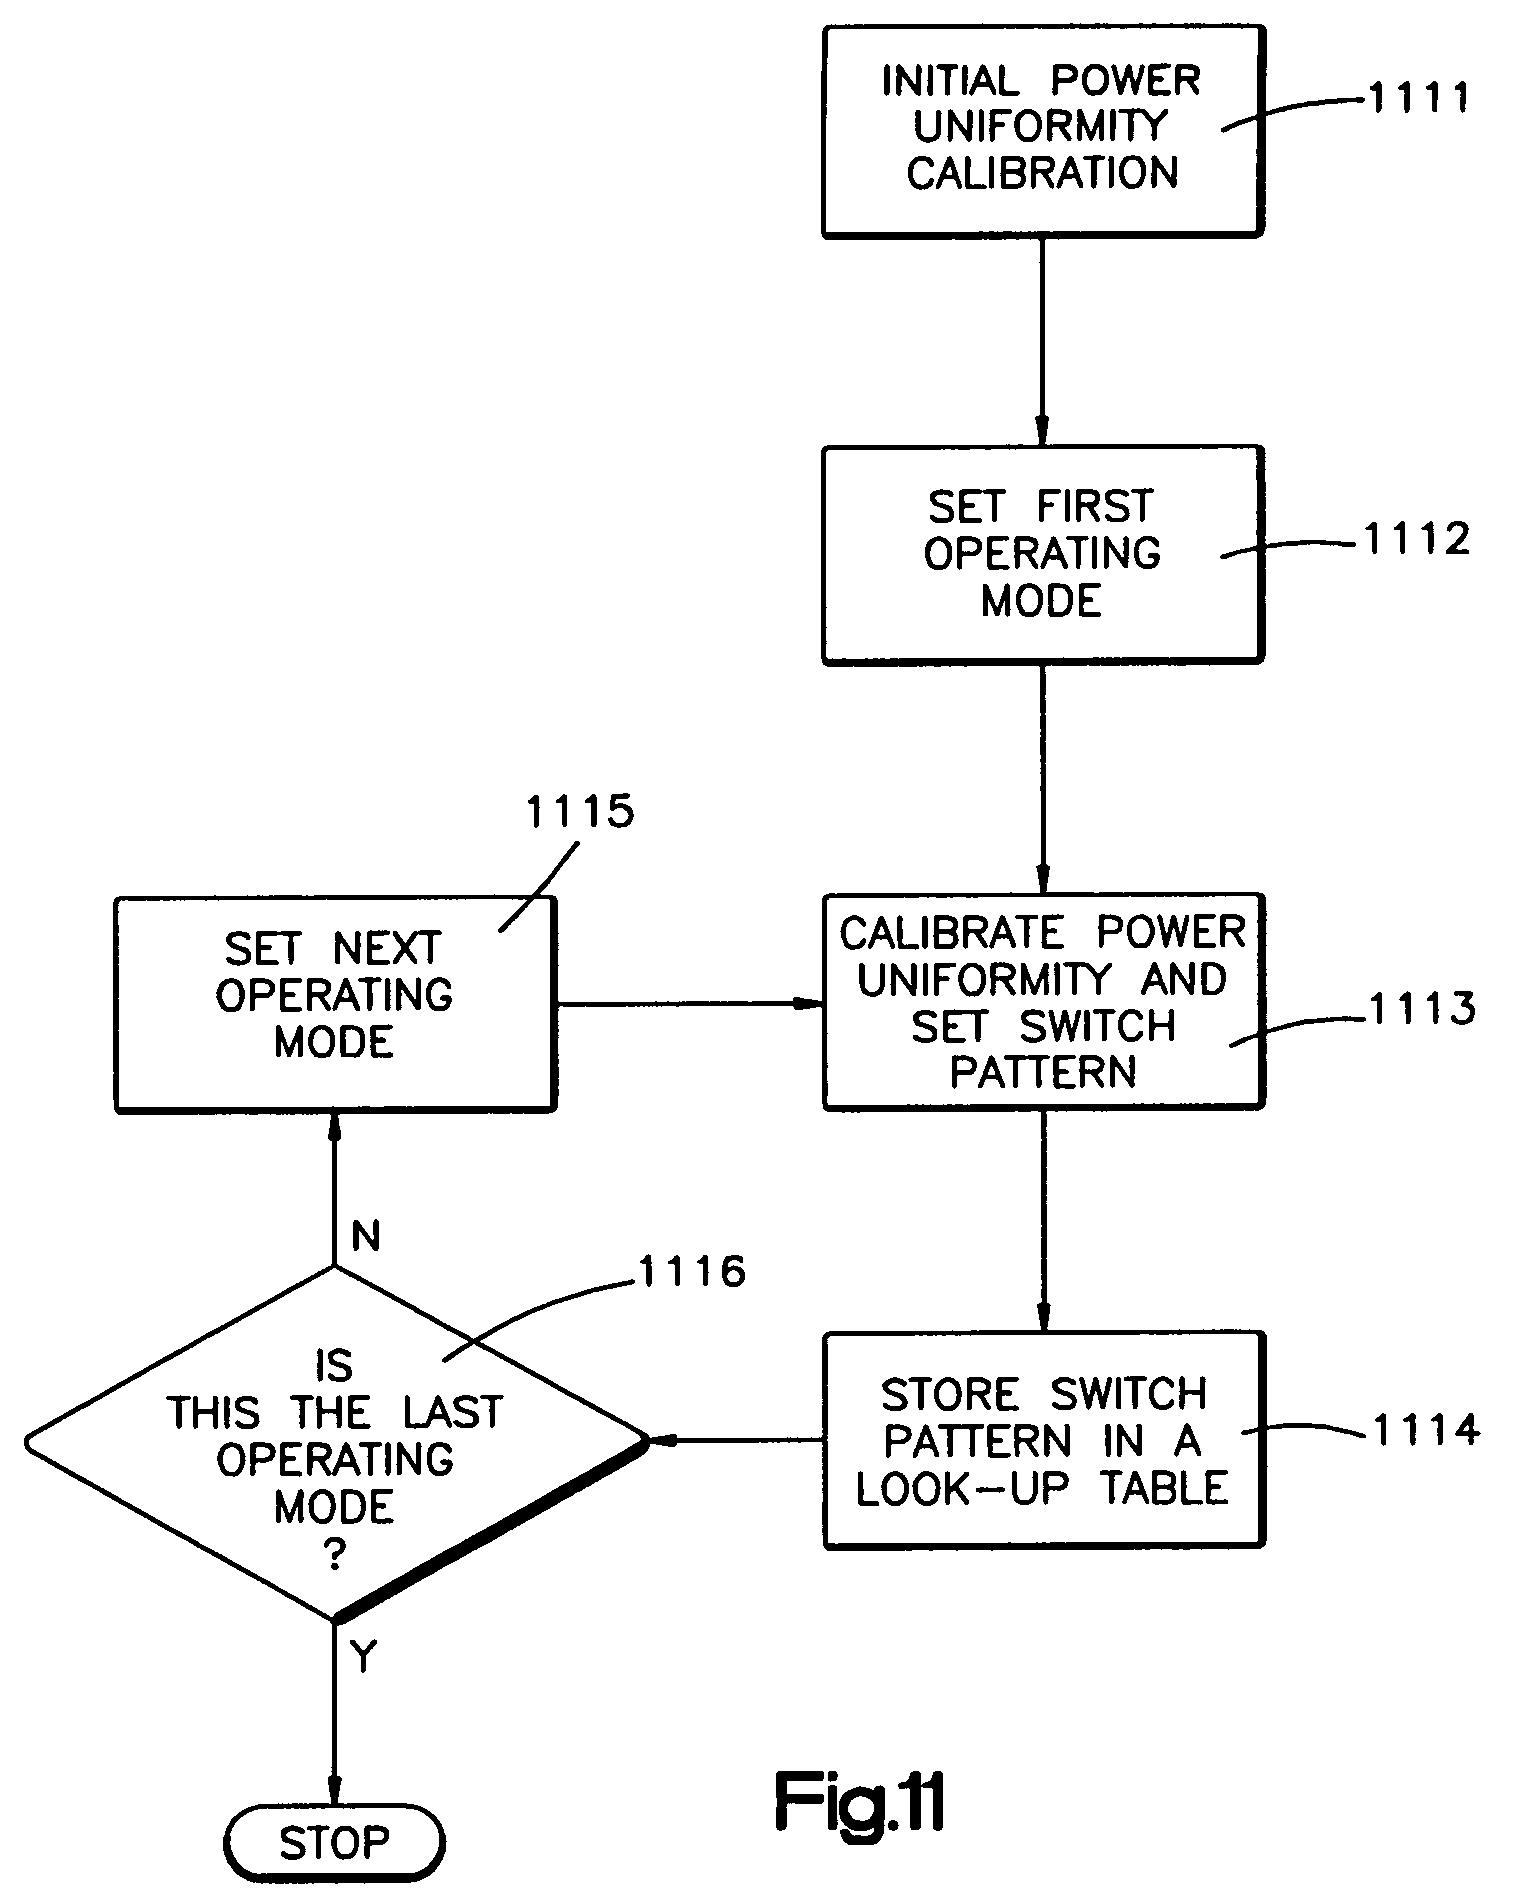 Power network reconfiguration using MEM switches